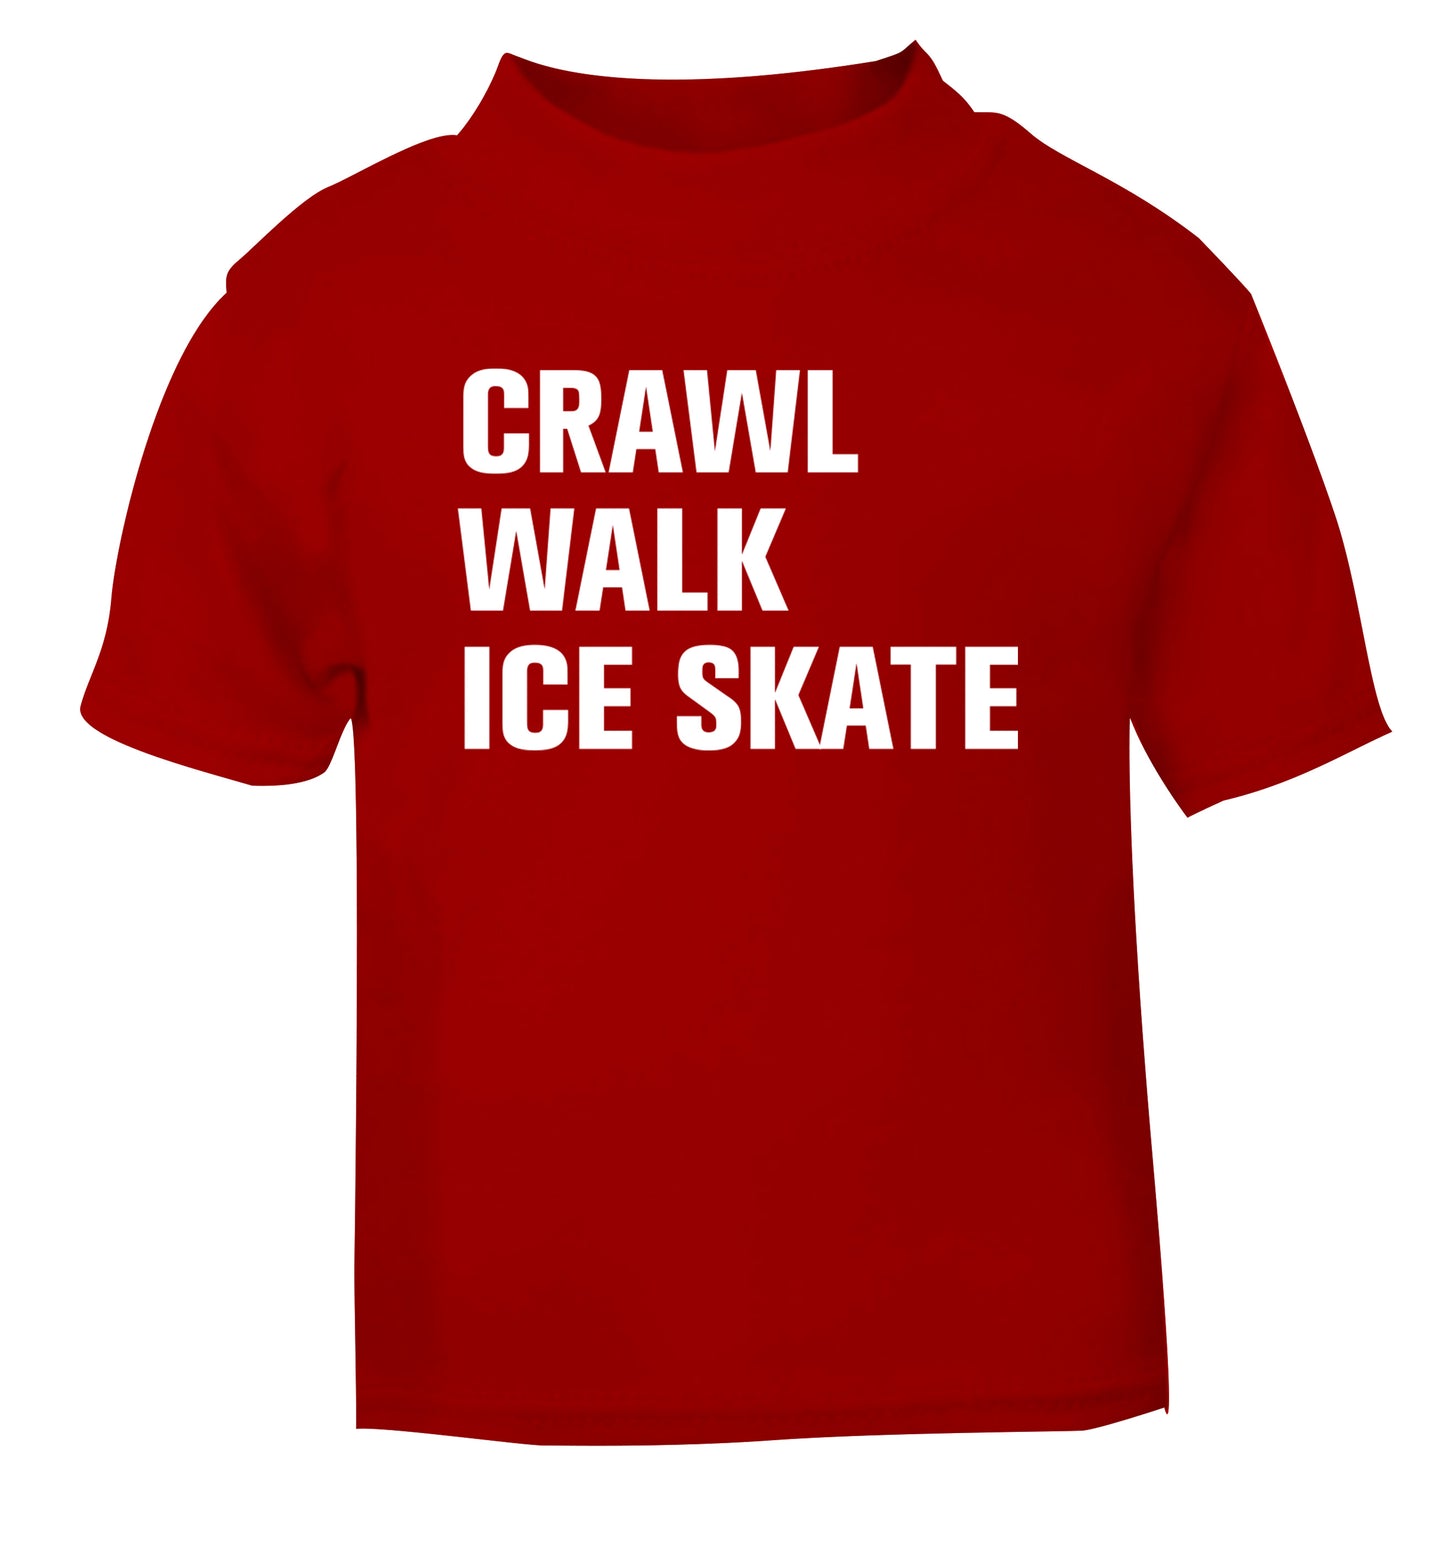 Crawl walk ice skate red Baby Toddler Tshirt 2 Years